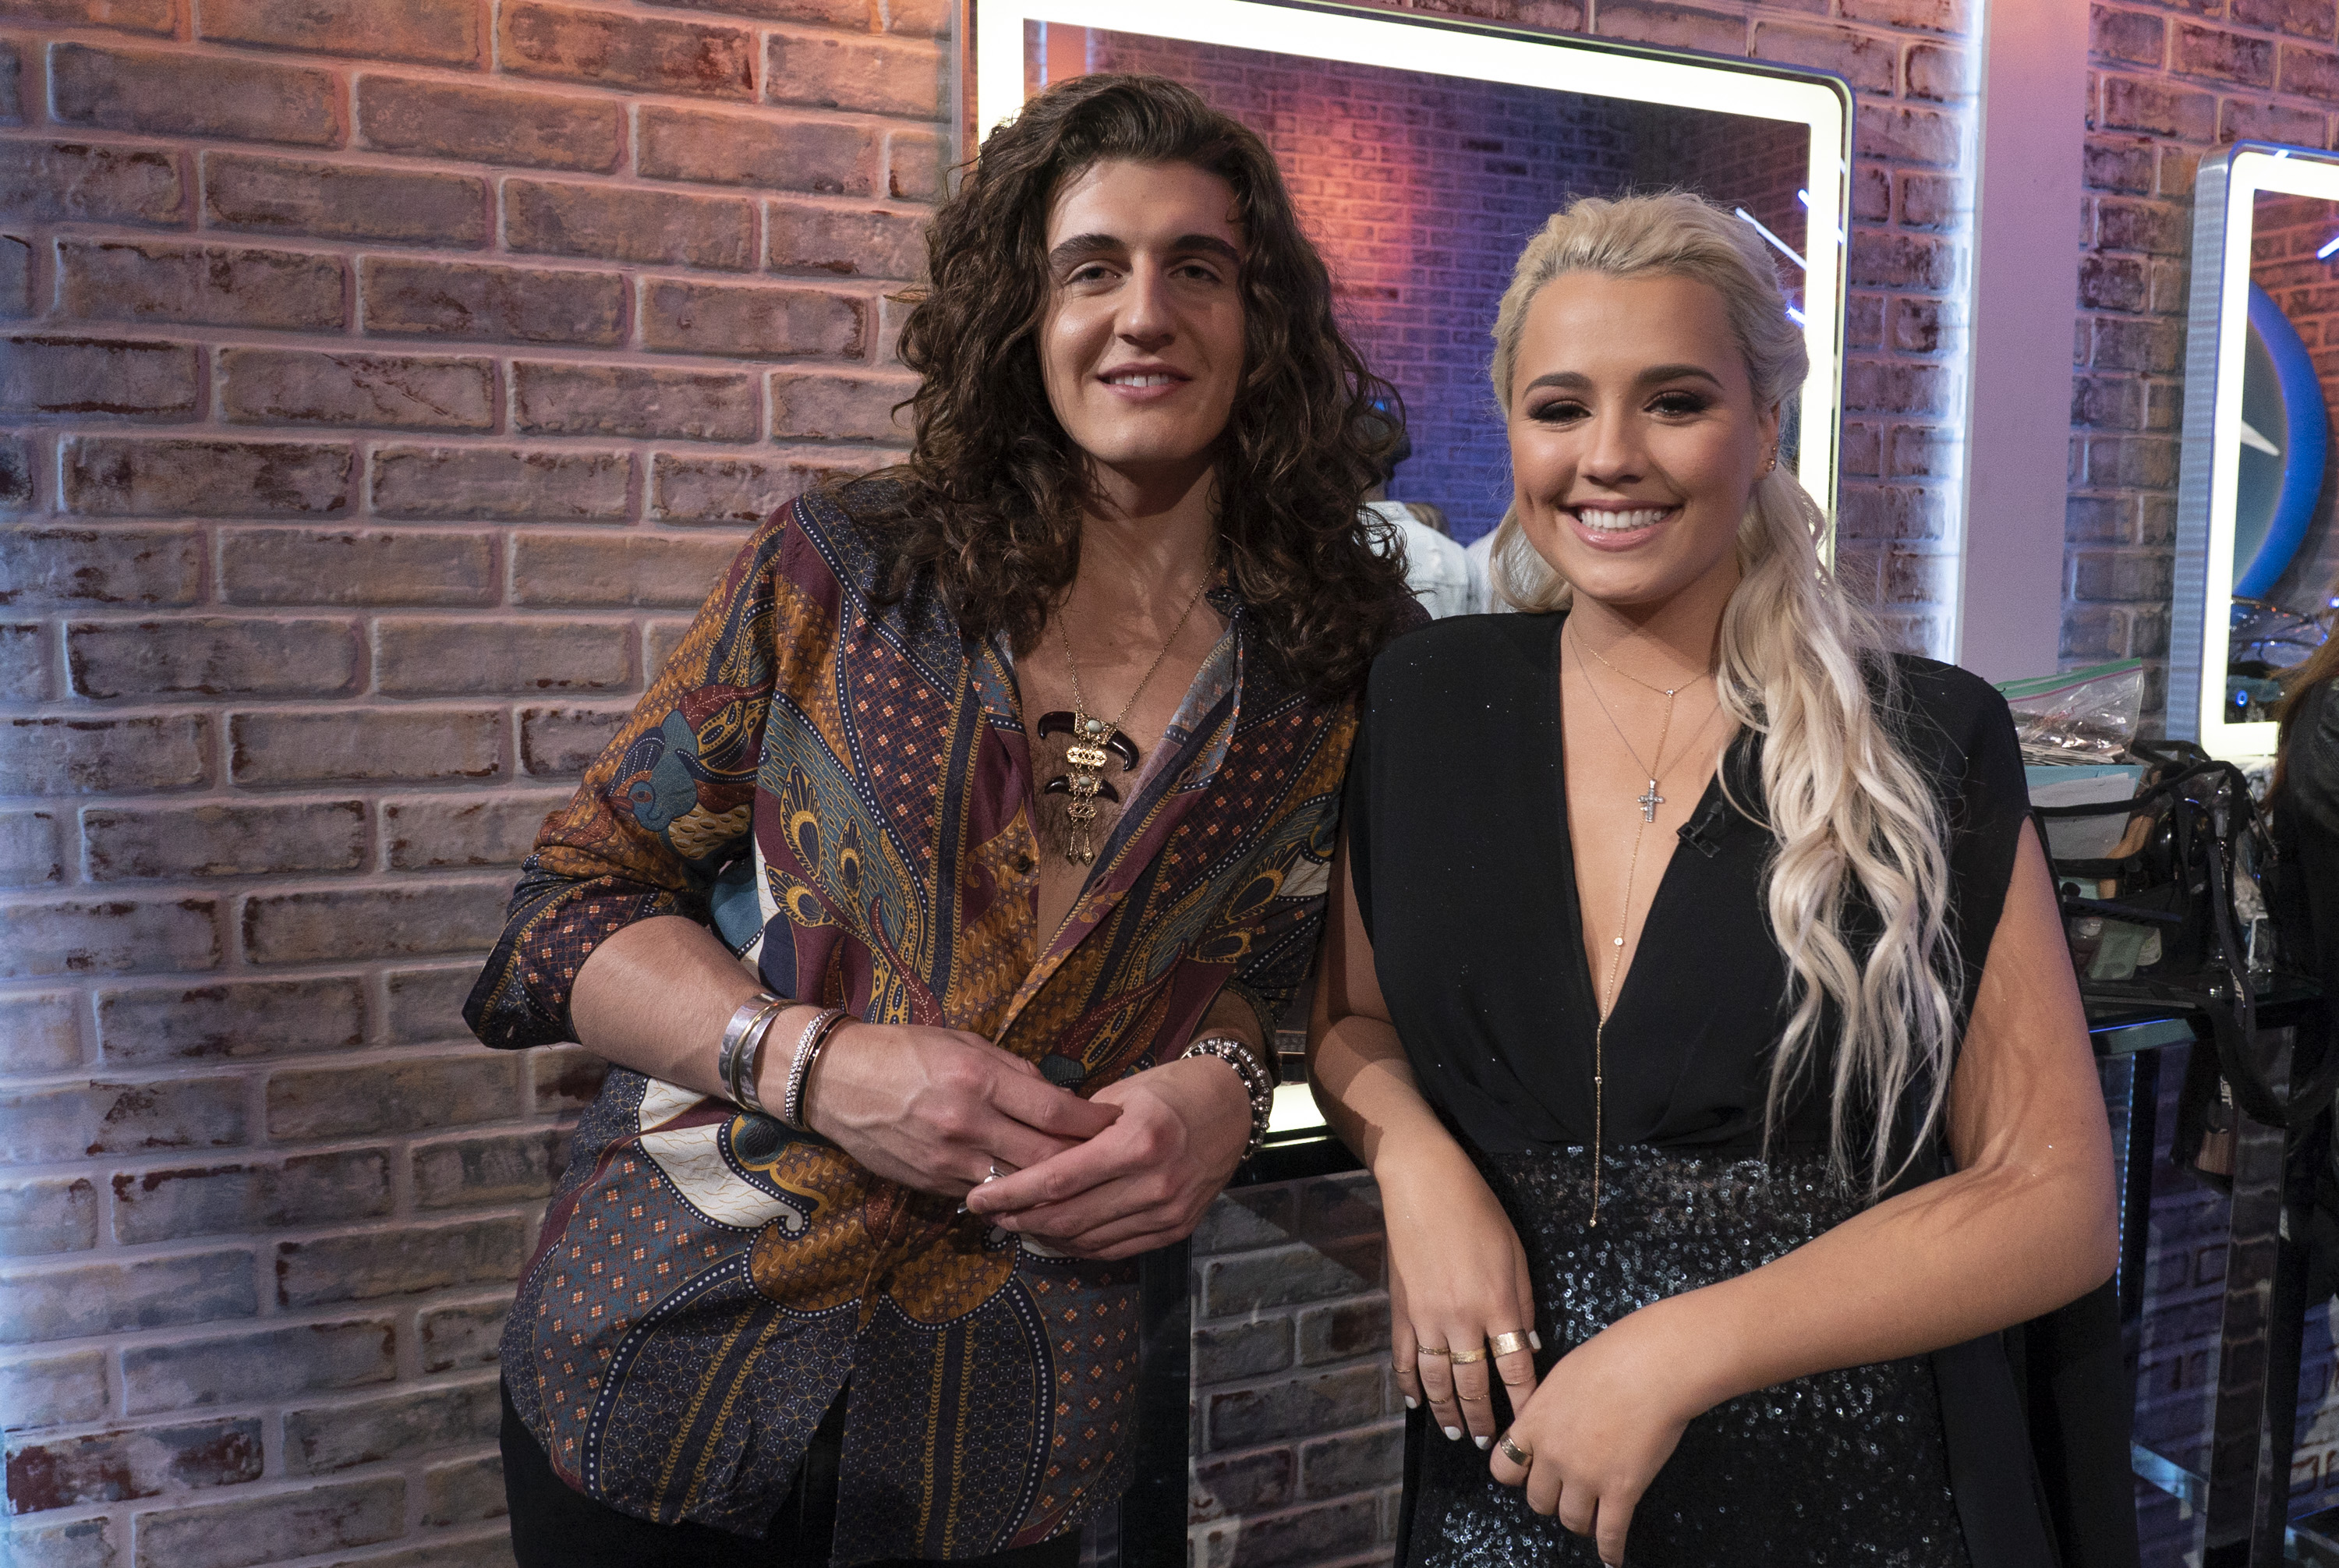 Cade Foehner and Gabby Barrett backstage at American Idol on May 20, 2018.
Photo credit: American Idol
